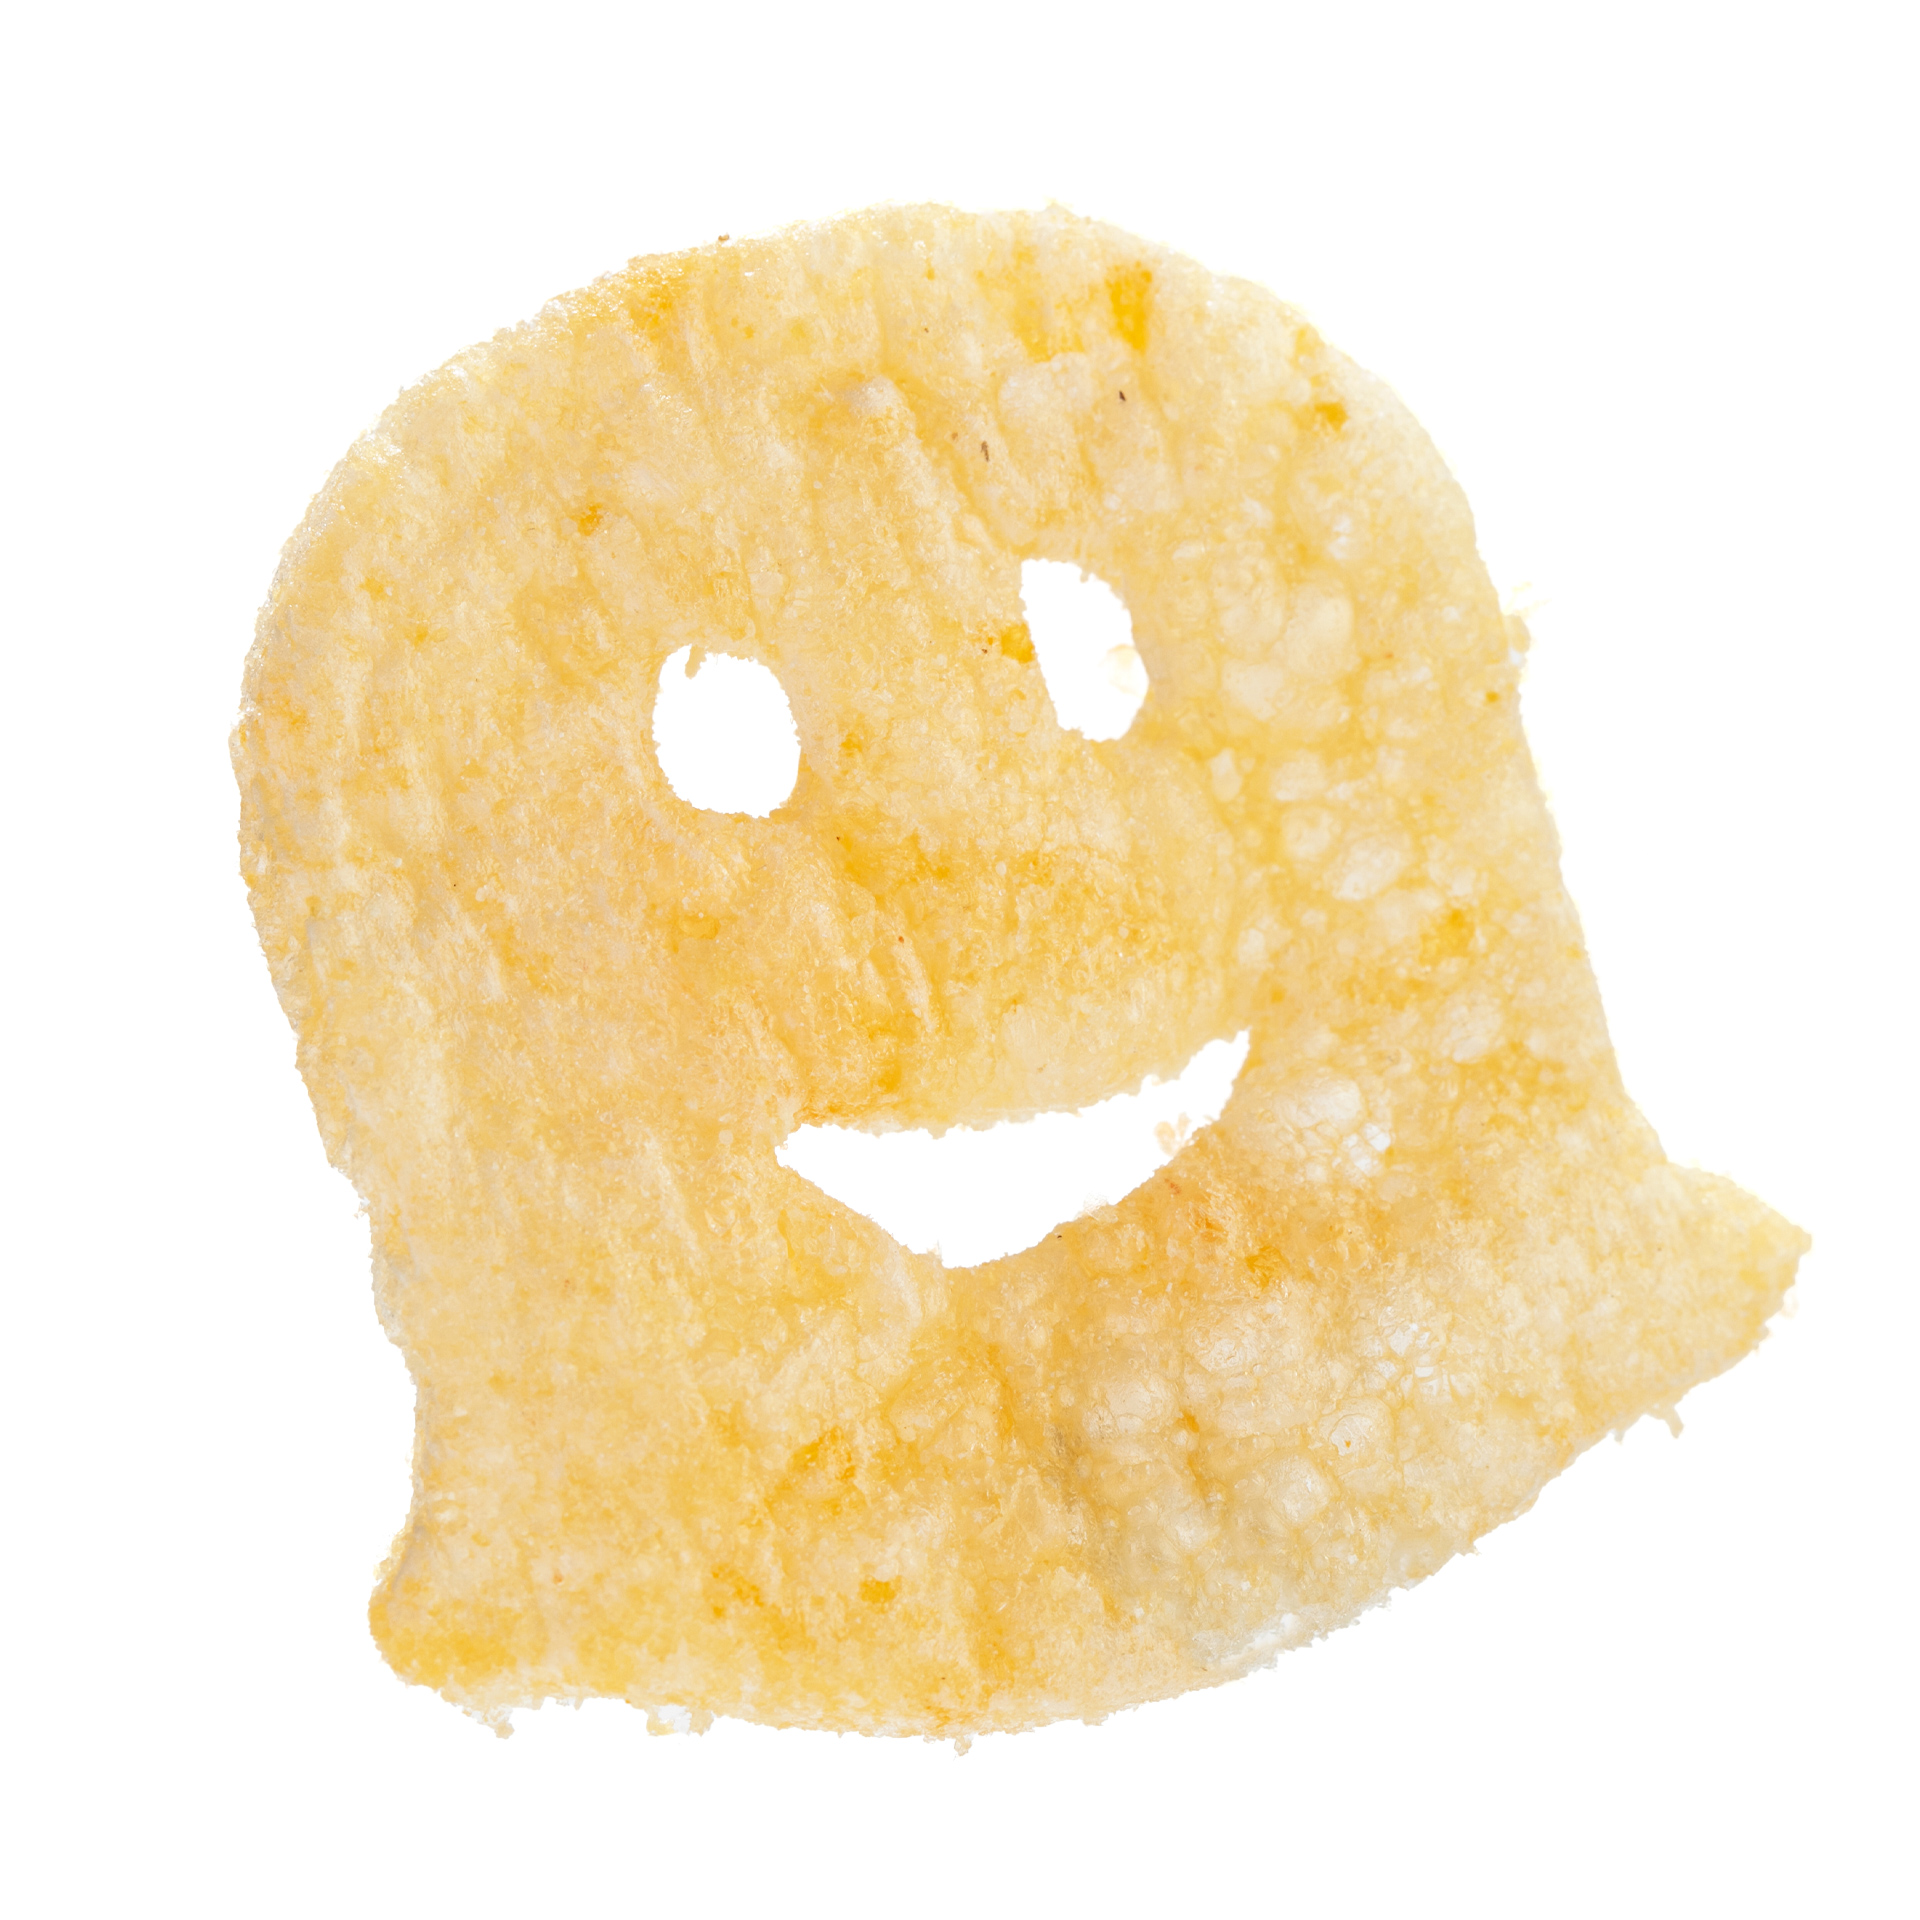 Original Monster Munch Potato Crisps image